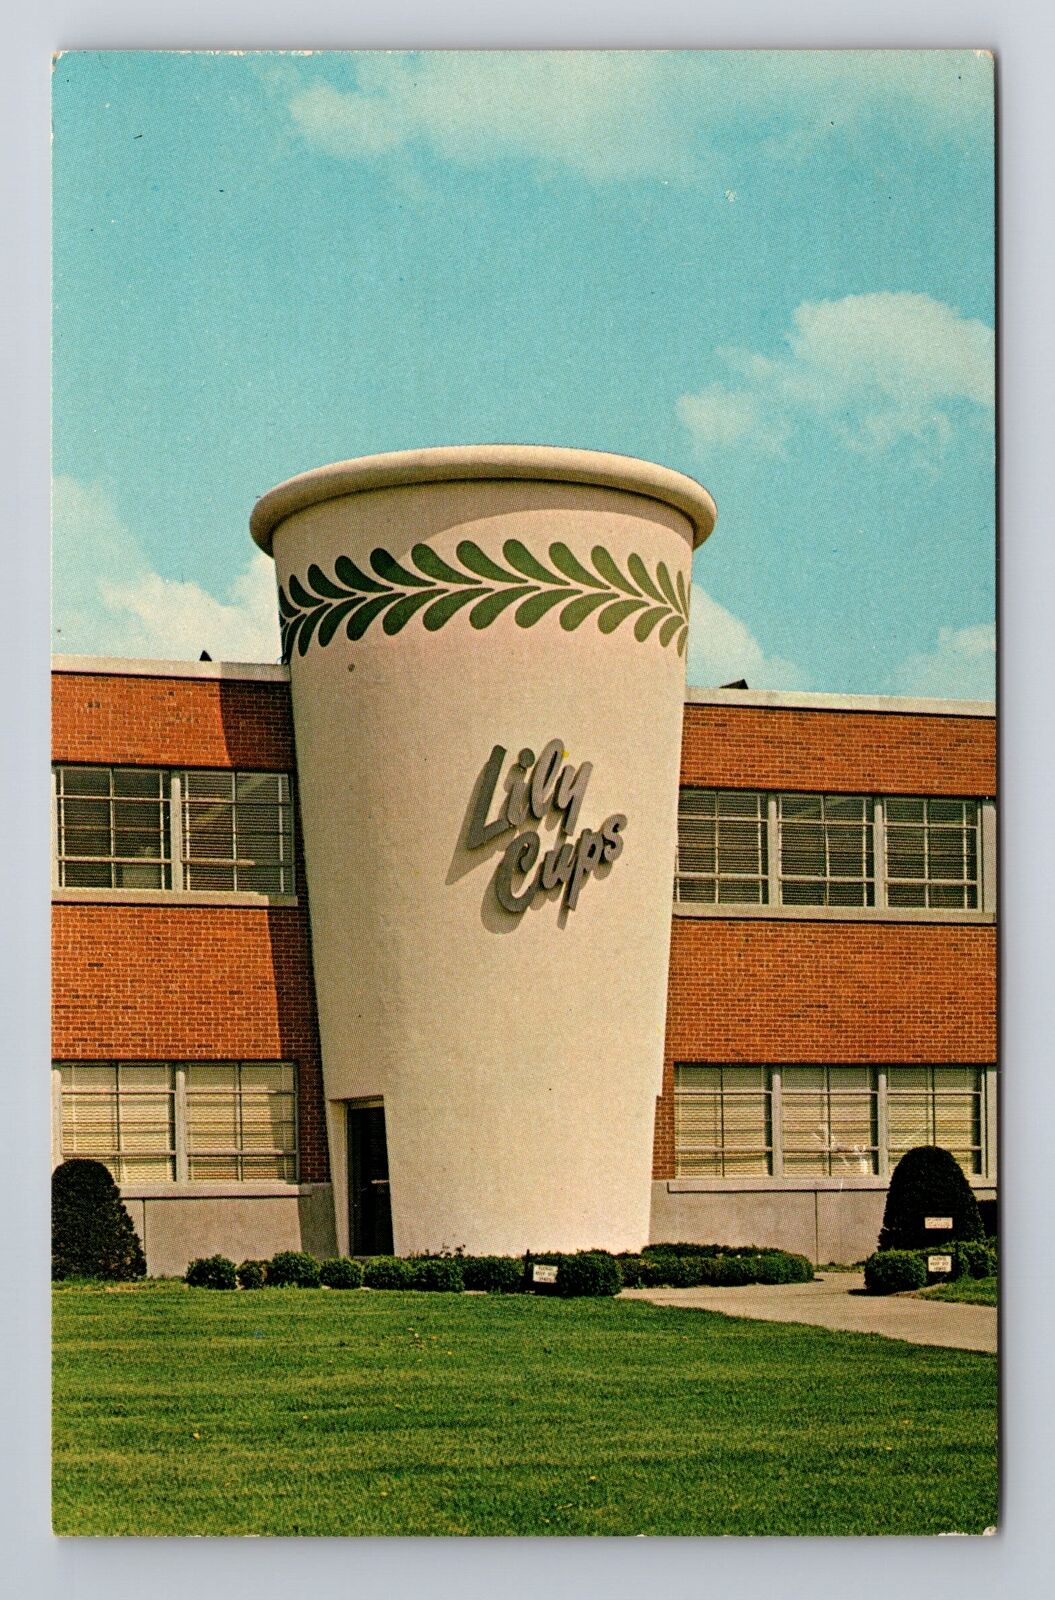 Springfield MO-Missouri, Lily-Tulip Cup Corporation, Antique, Vintage Postcard